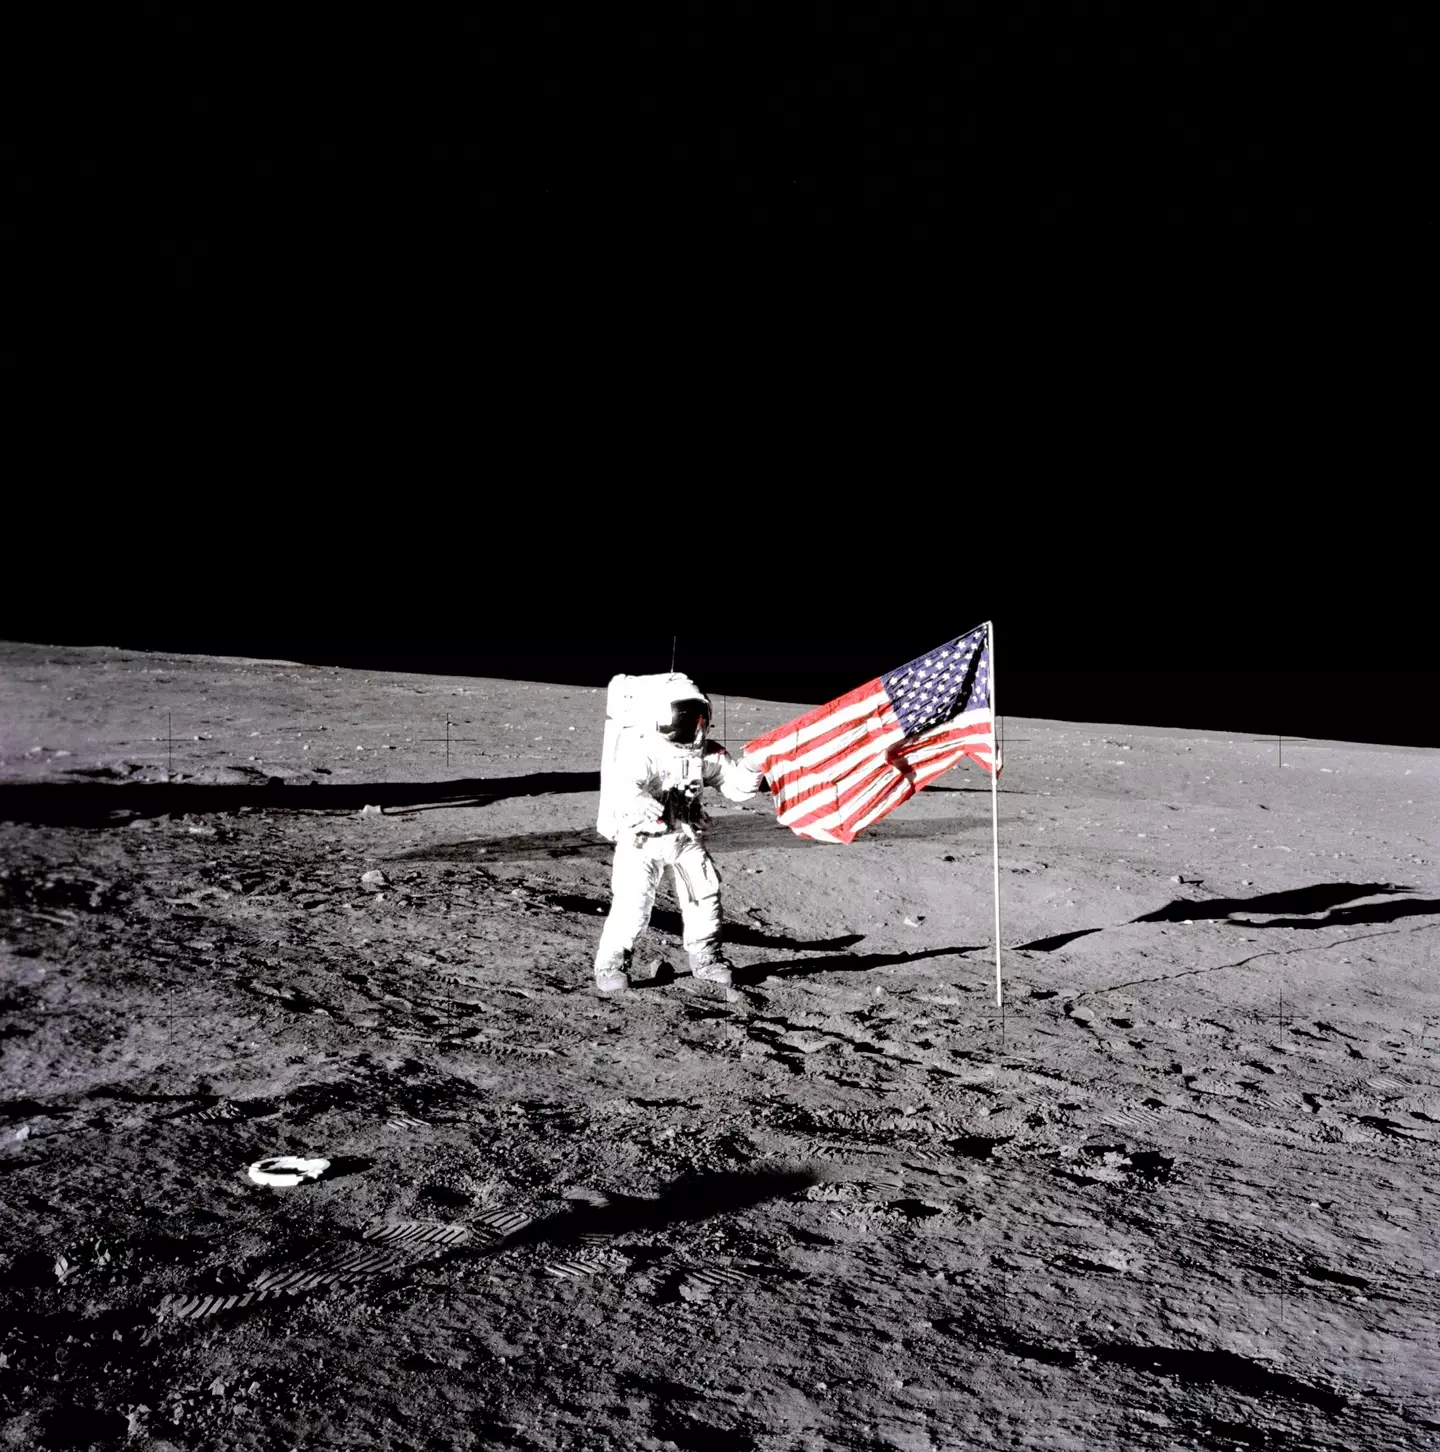 NASA Apollo 12 lunar landing mission astronaut Pete Conrad unfurls the American flag on the lunar surface during his first spacewalk November 19, 1969 on the Moon.